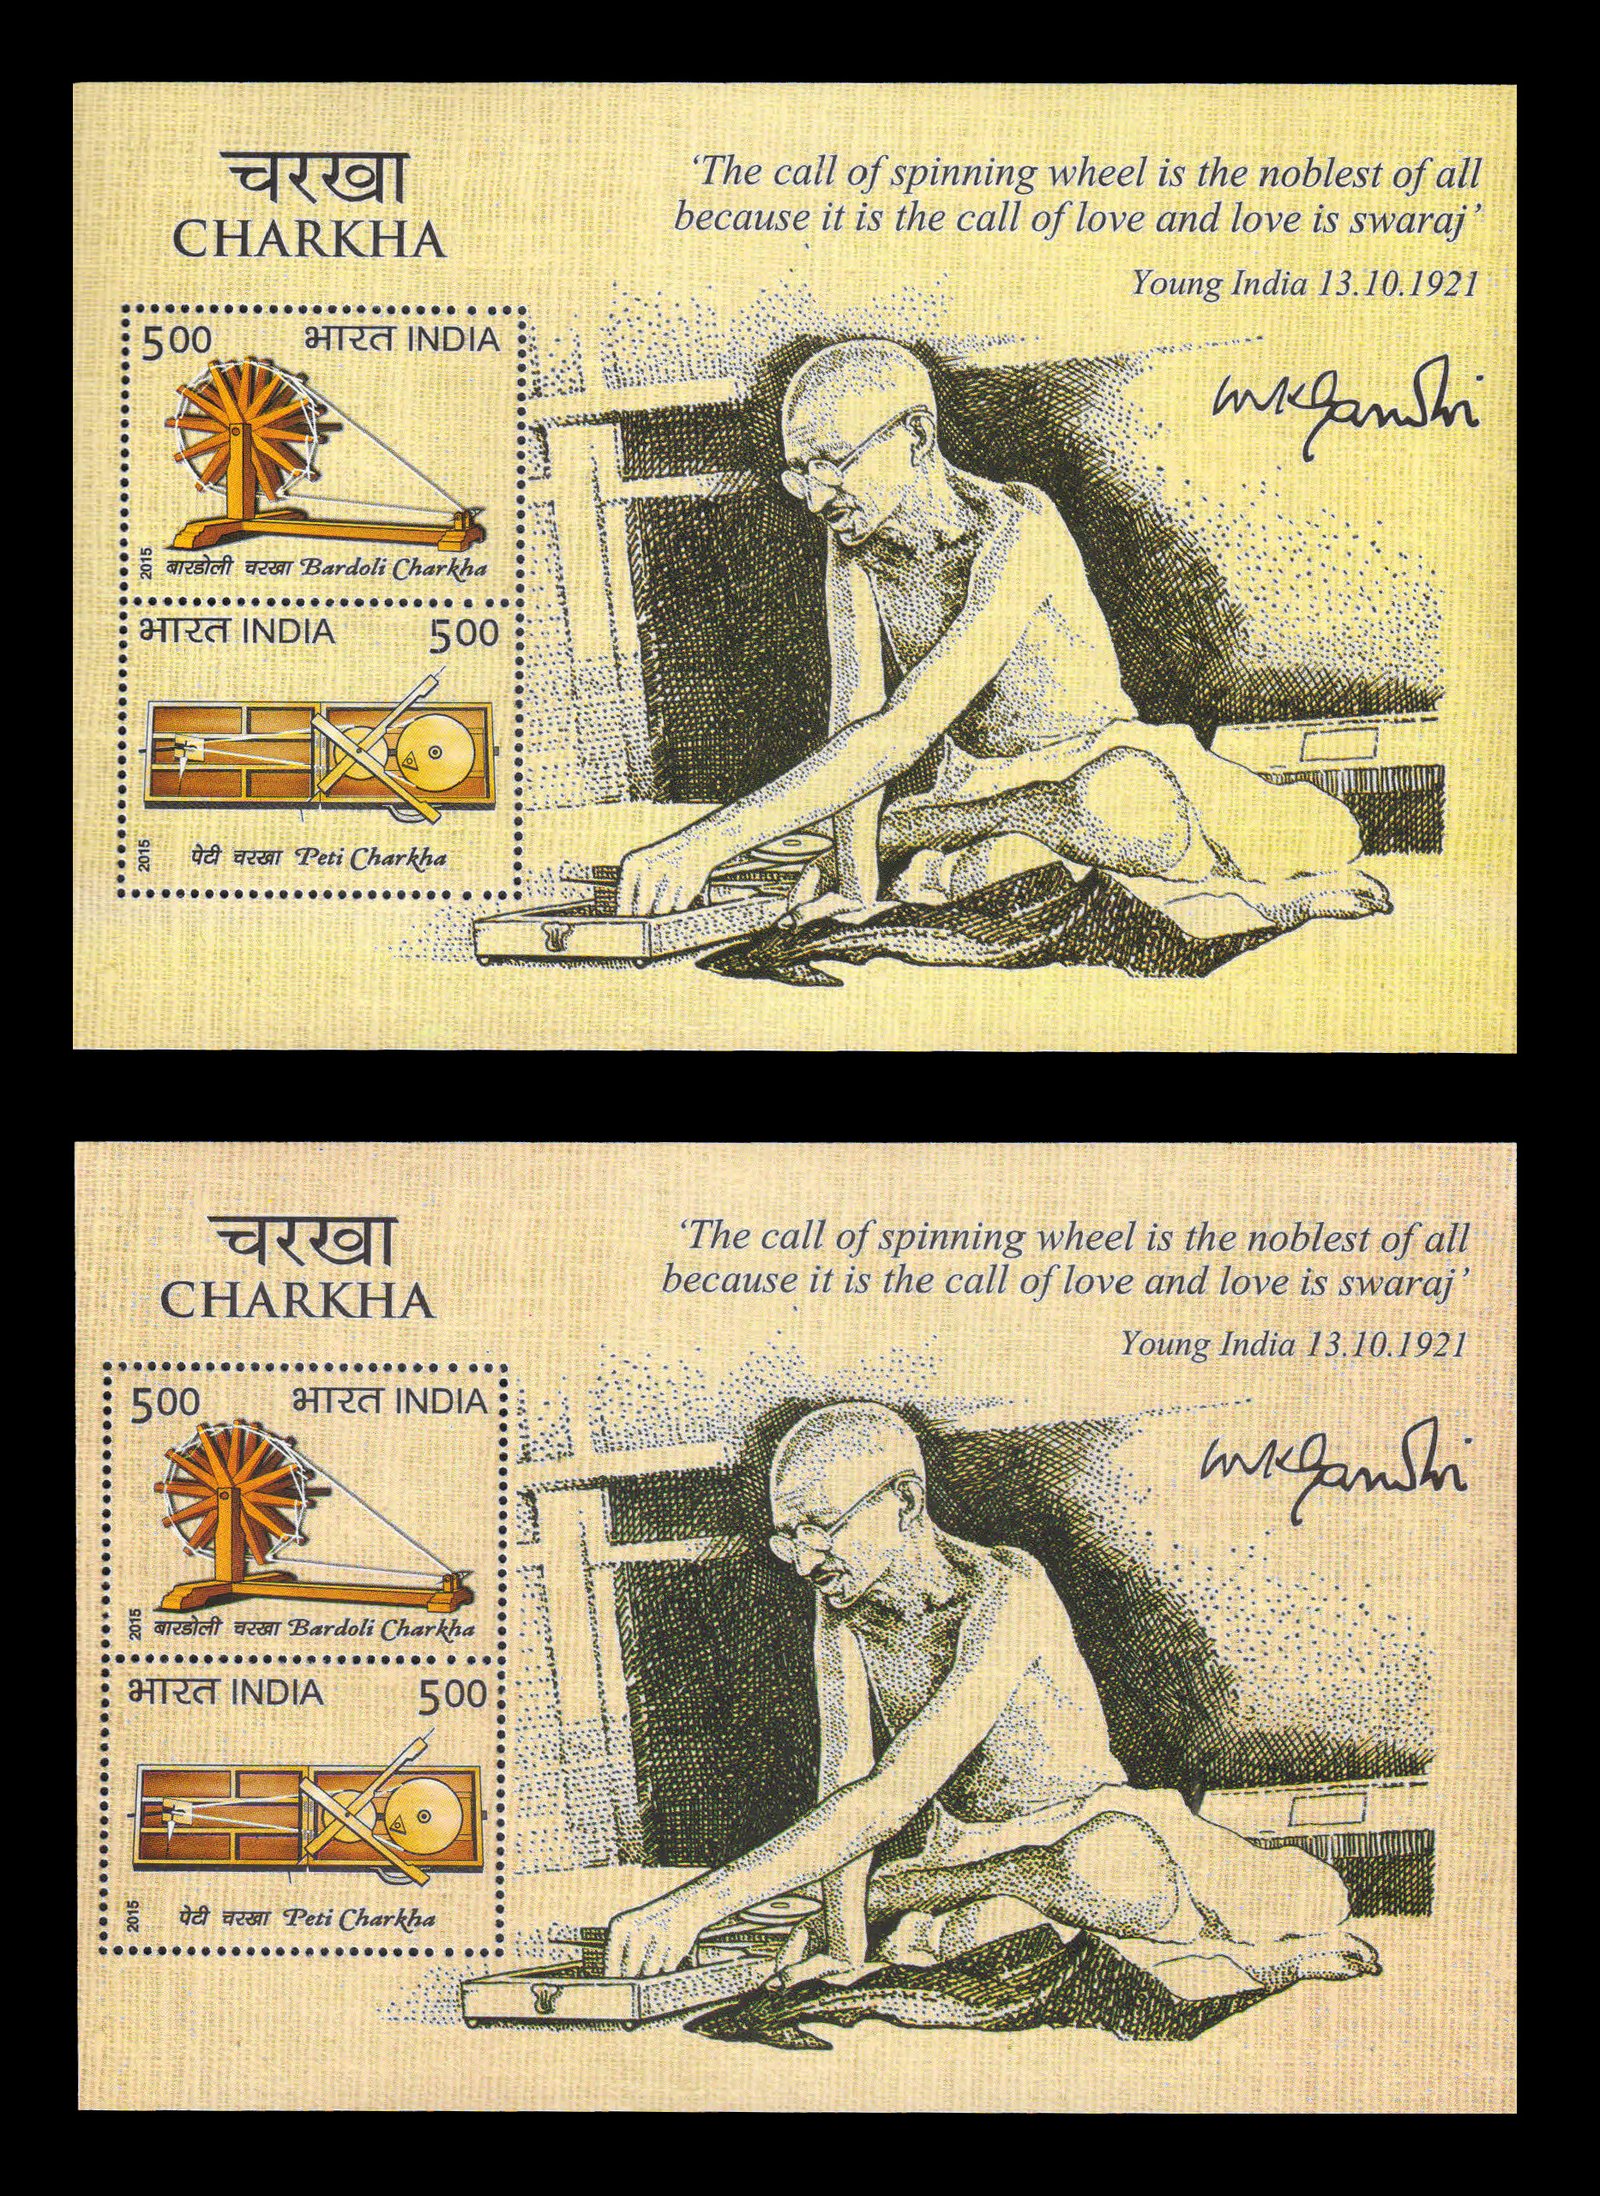 INDIA 2015 - Charkha, Spinning Wheel, Mahatma Gandhi, Colour Variety, Set of 2 Miniature Sheet, MNH